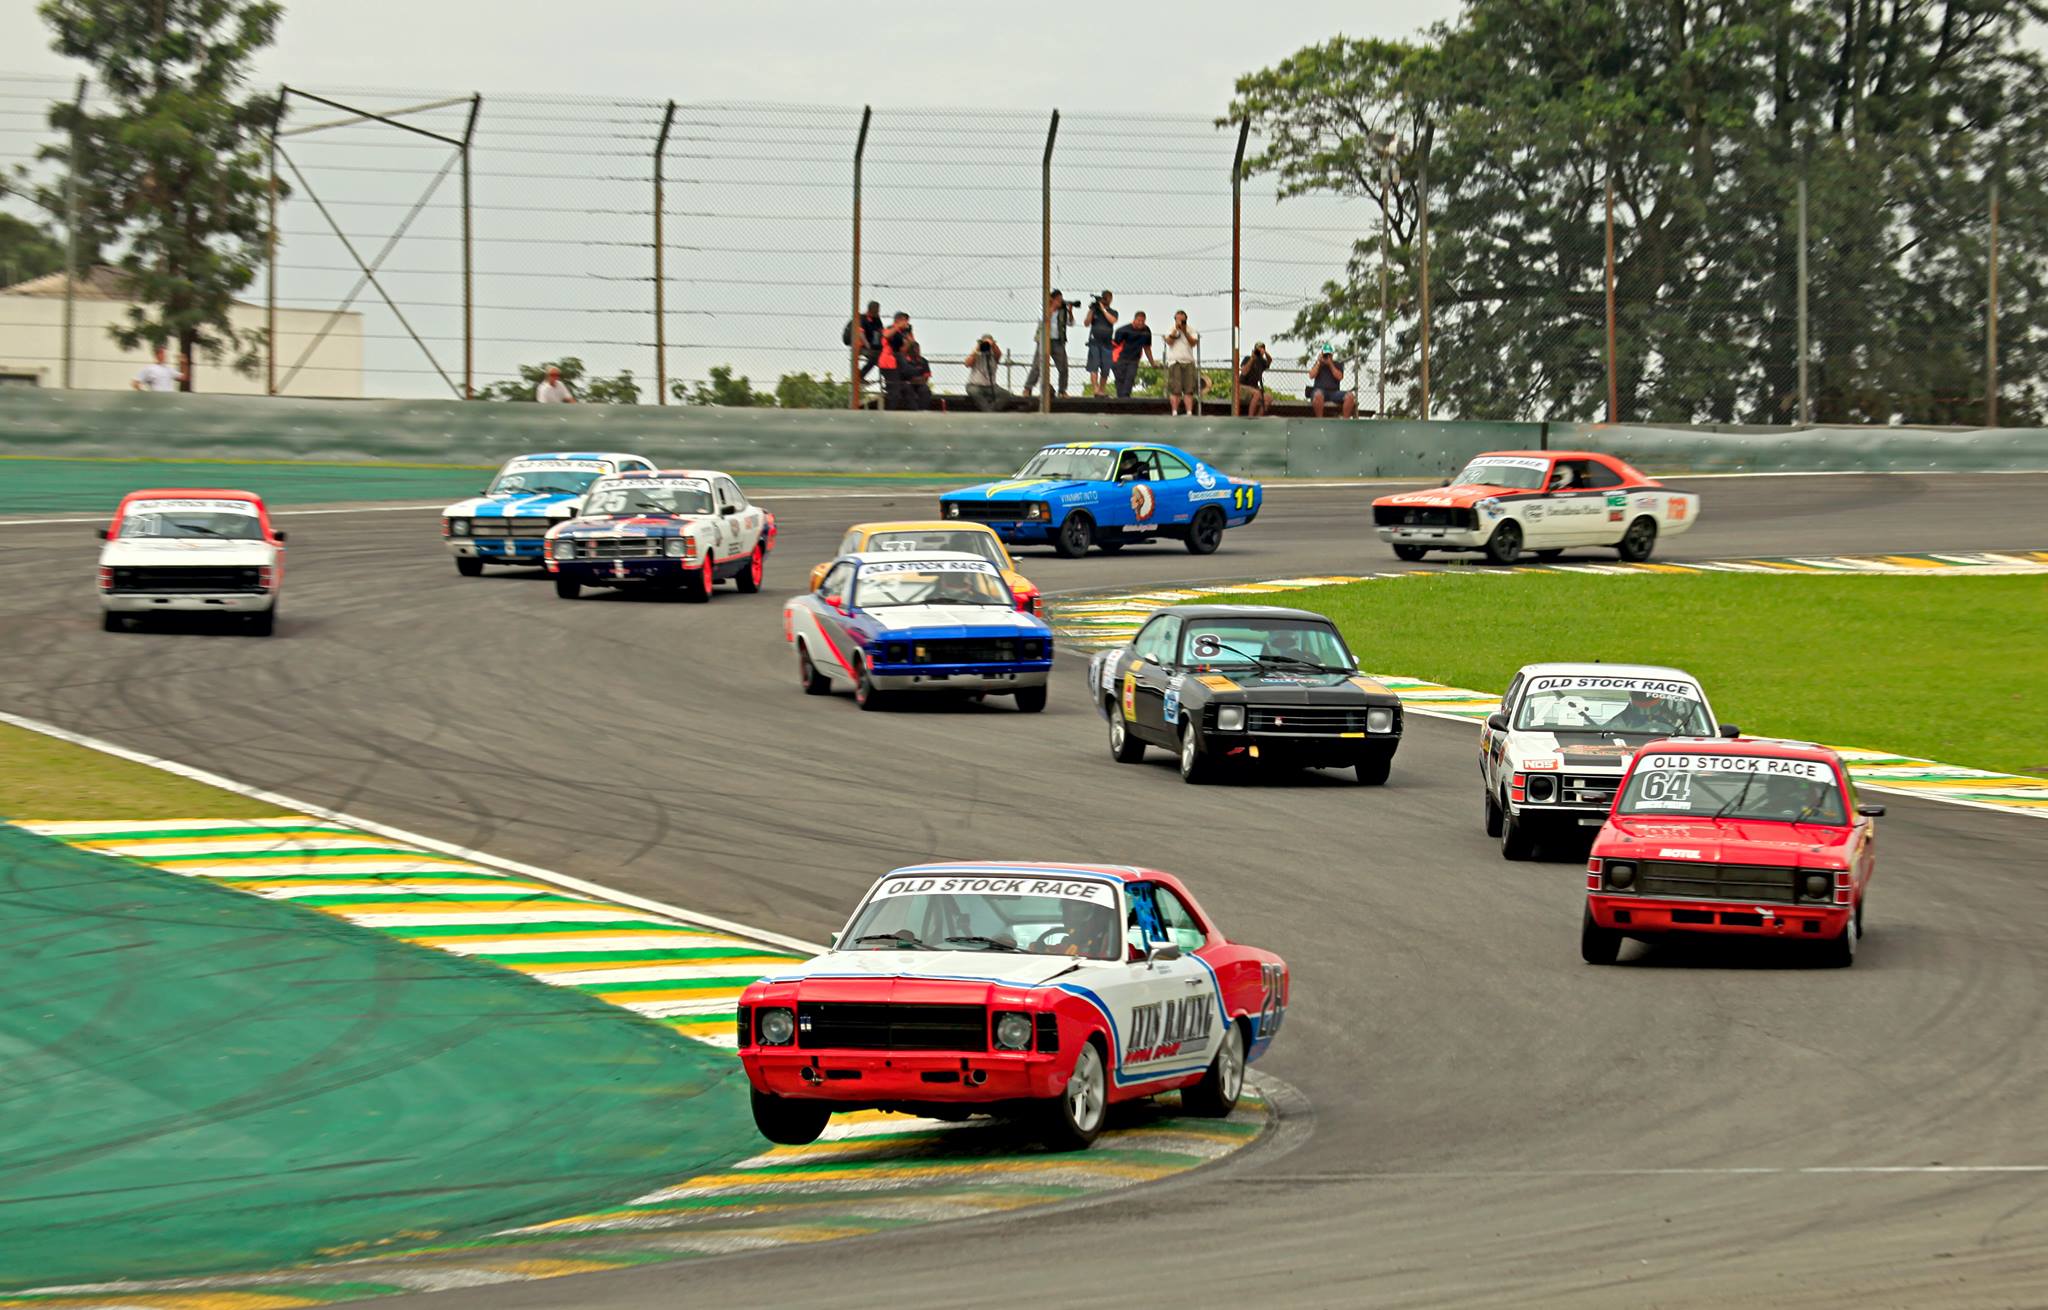 Old Stock Race - Prova Inaugural em Interlagos - 20/12/2015